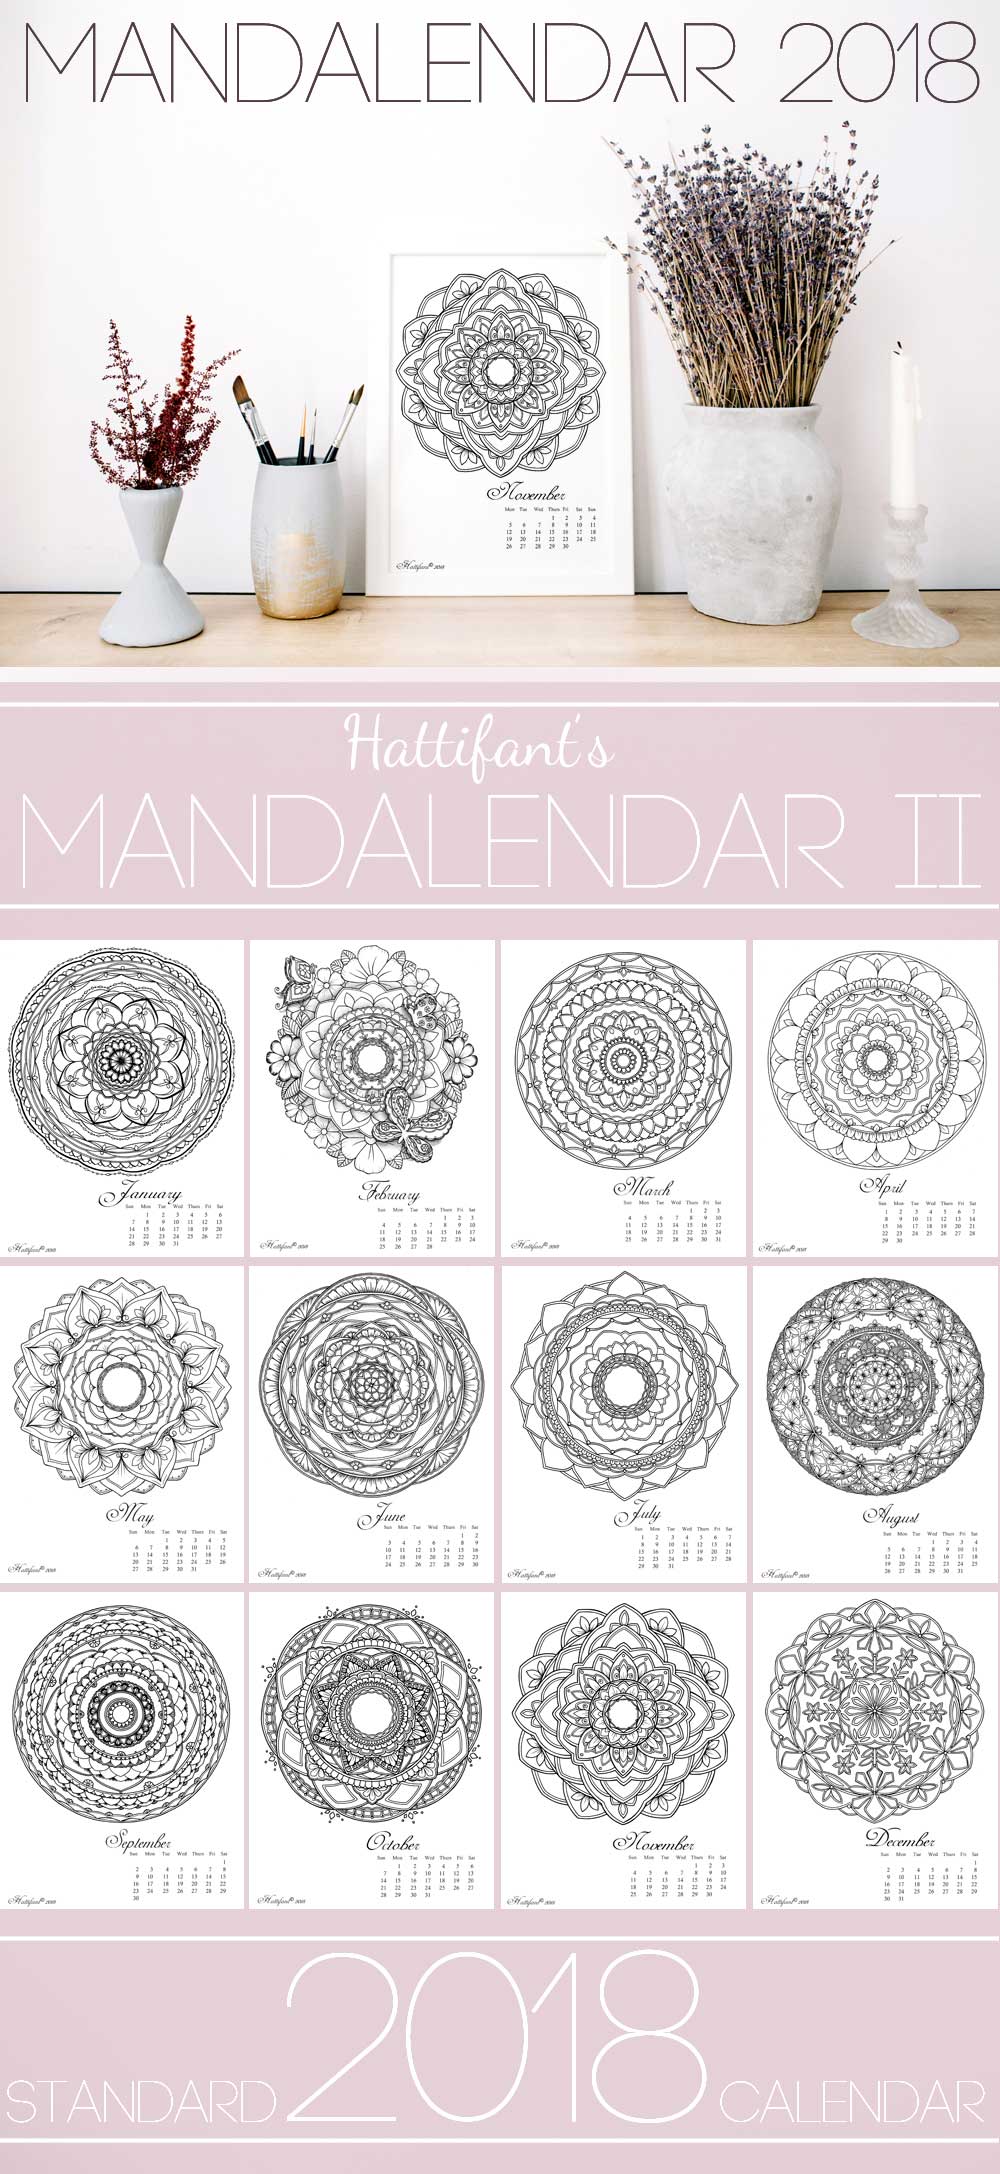 Hattifant's Mandalendar 2018 a Mandala Calendar to Color and Plan with